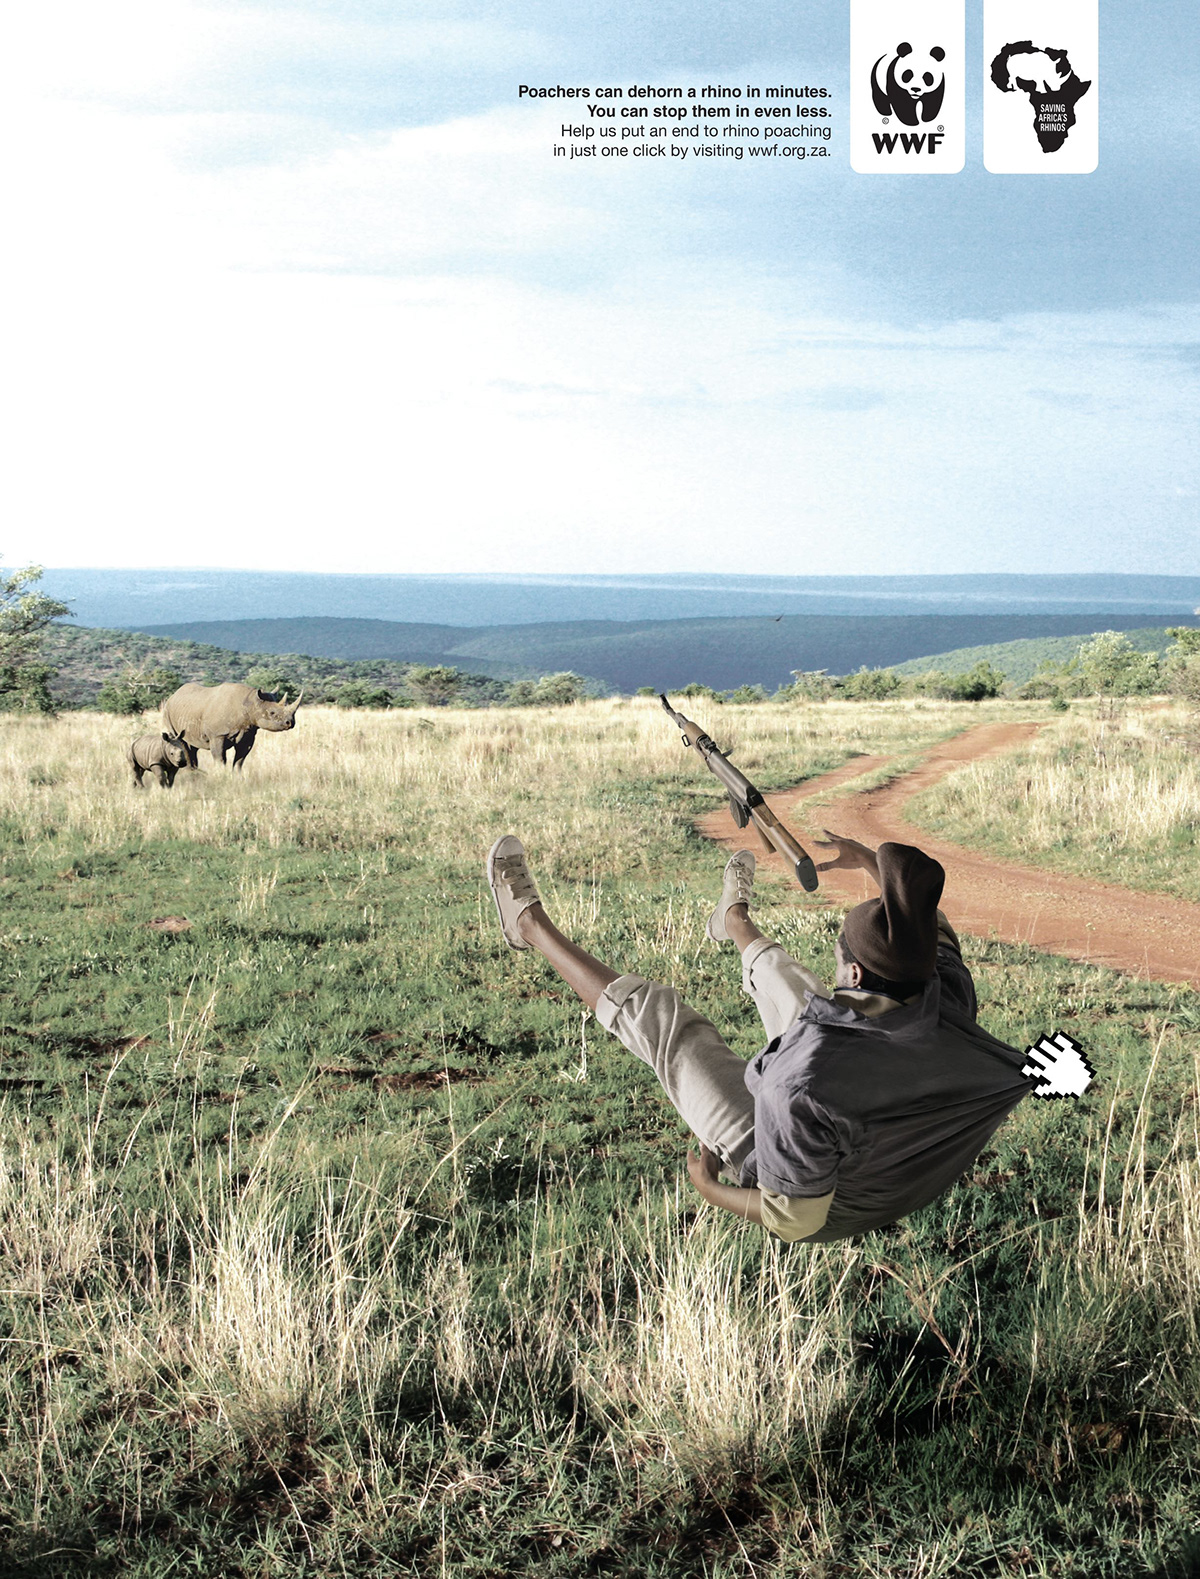 WWF Rhino conservation